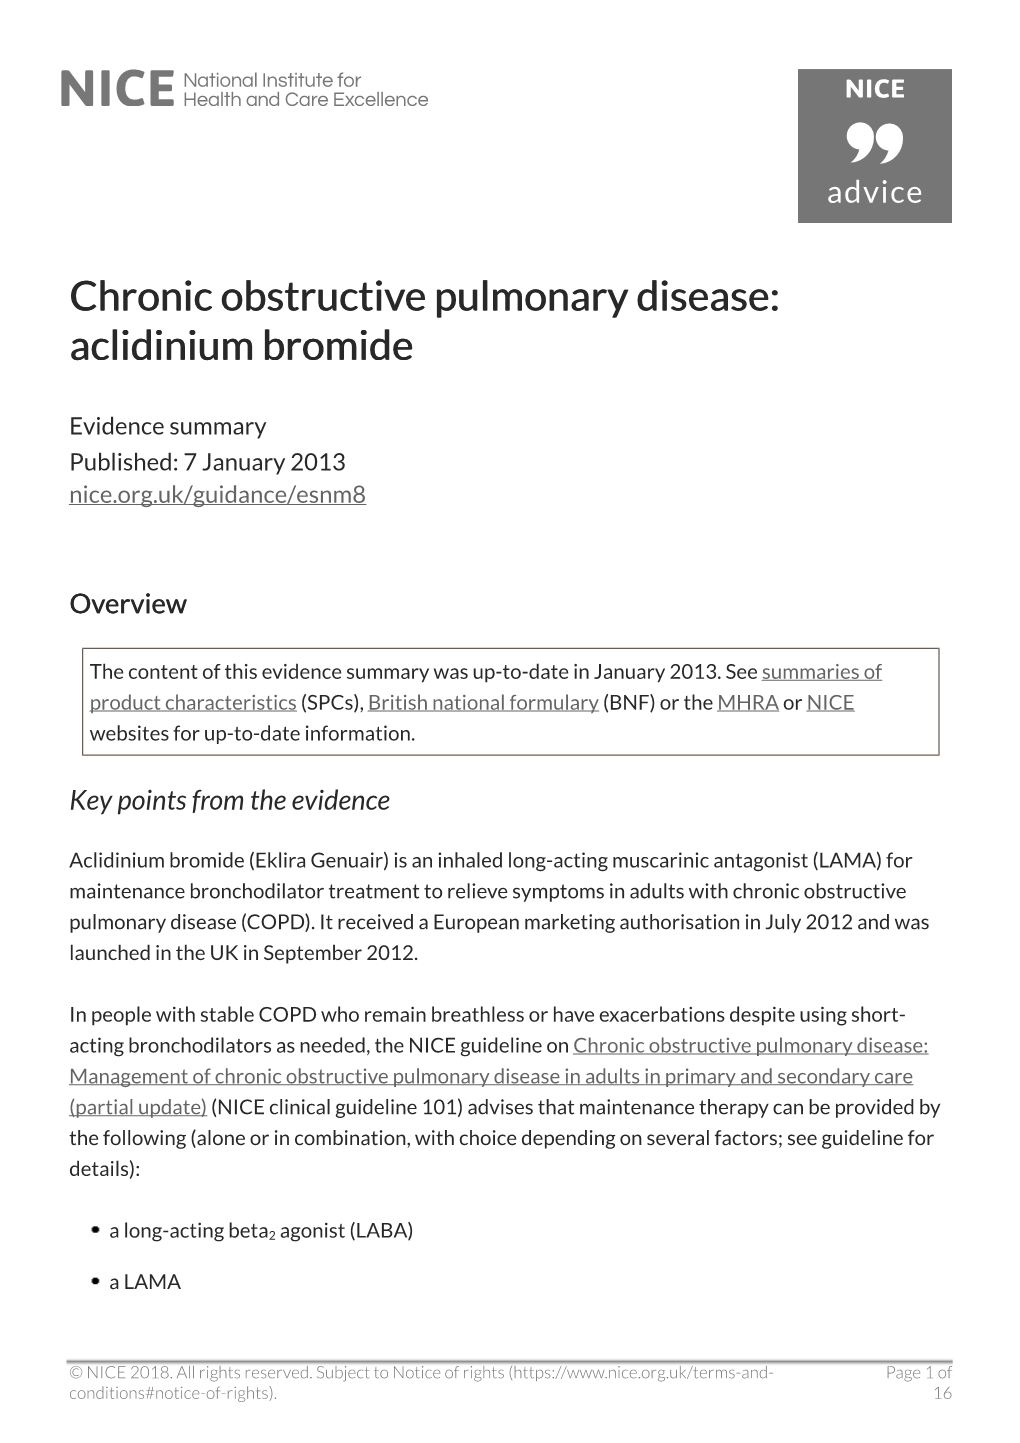 Chronic Obstructive Pulmonary Disease: Aclidinium Bromide